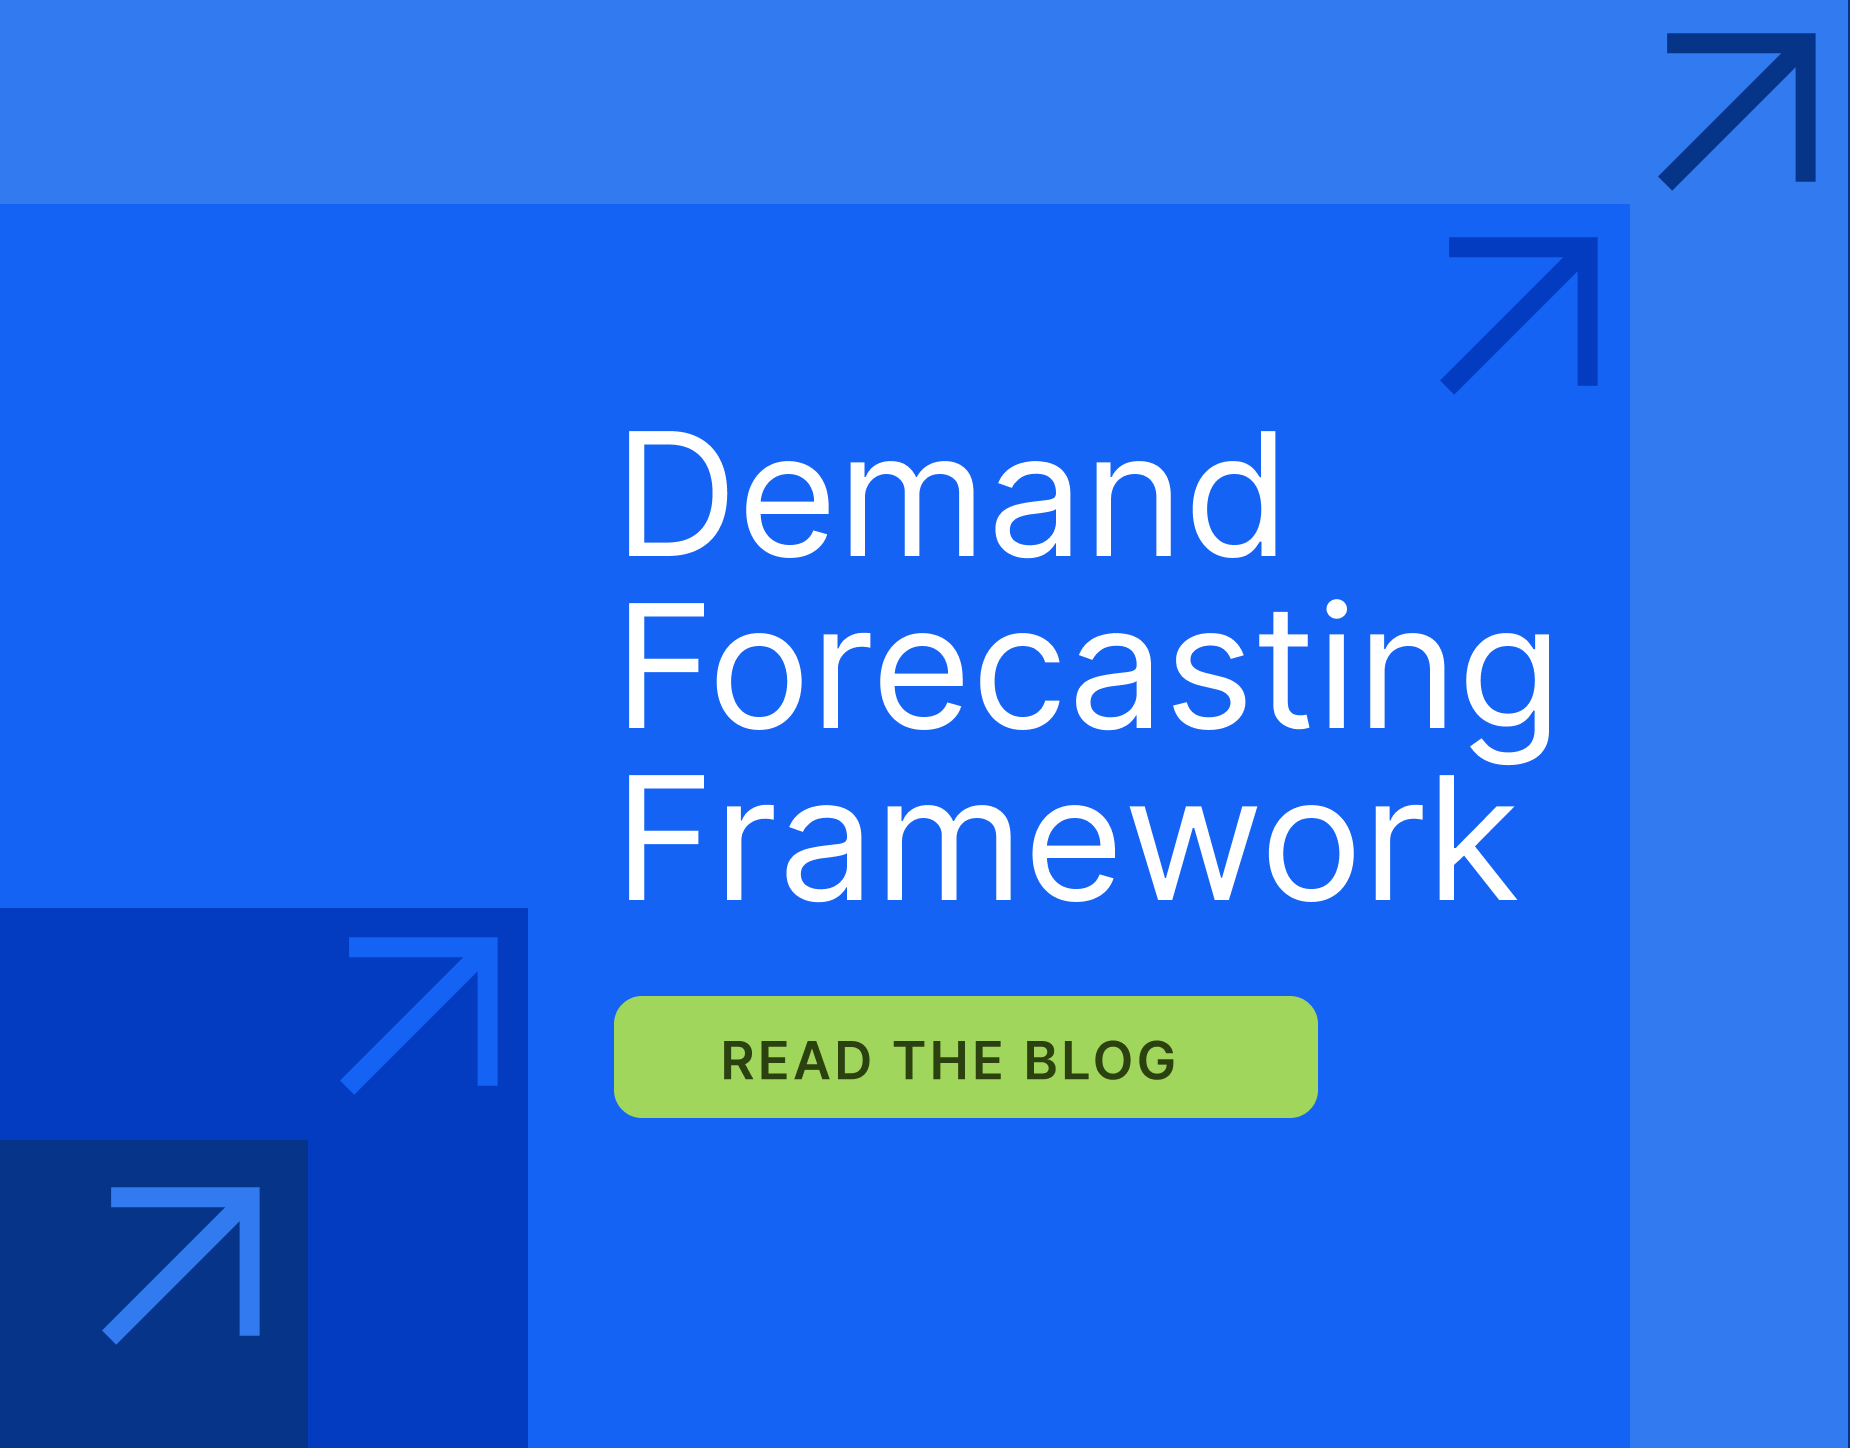 Demand Forecasting Framework: A Nimble, Deep Learning Approach to Model Demand